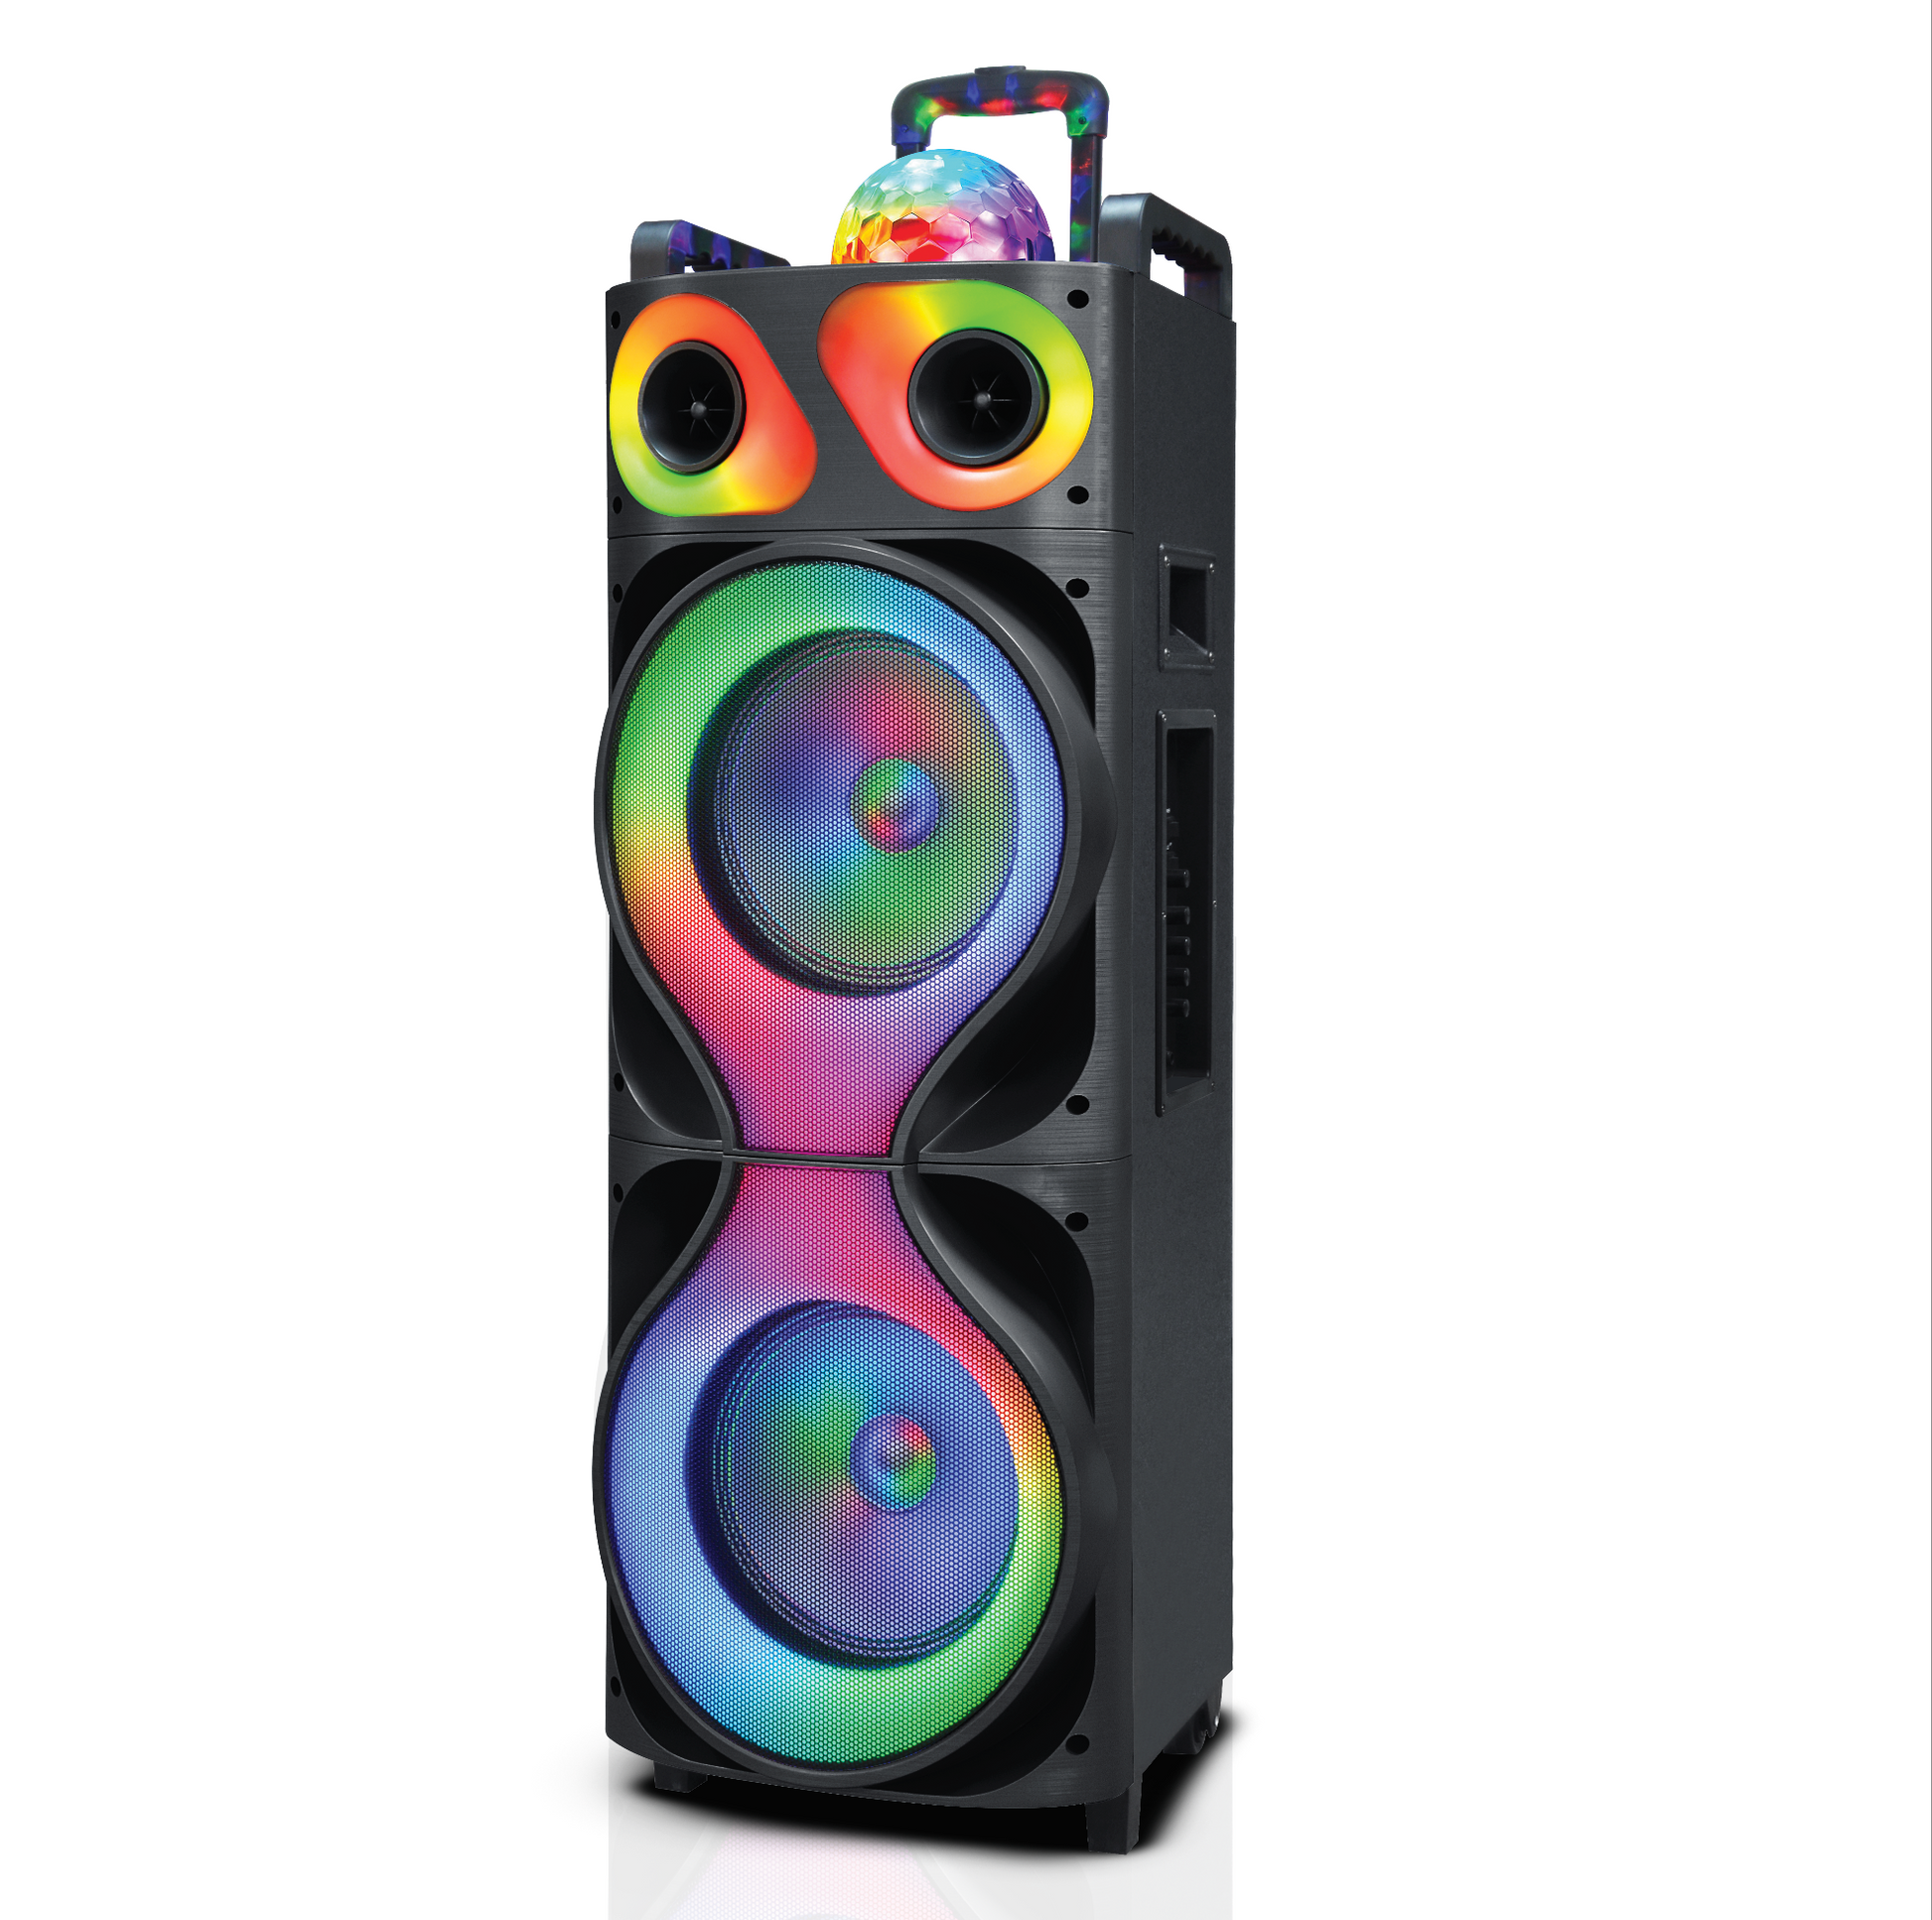 Vivitar Light-Up Disco Karaoke Bluetooth Speaker with Dual